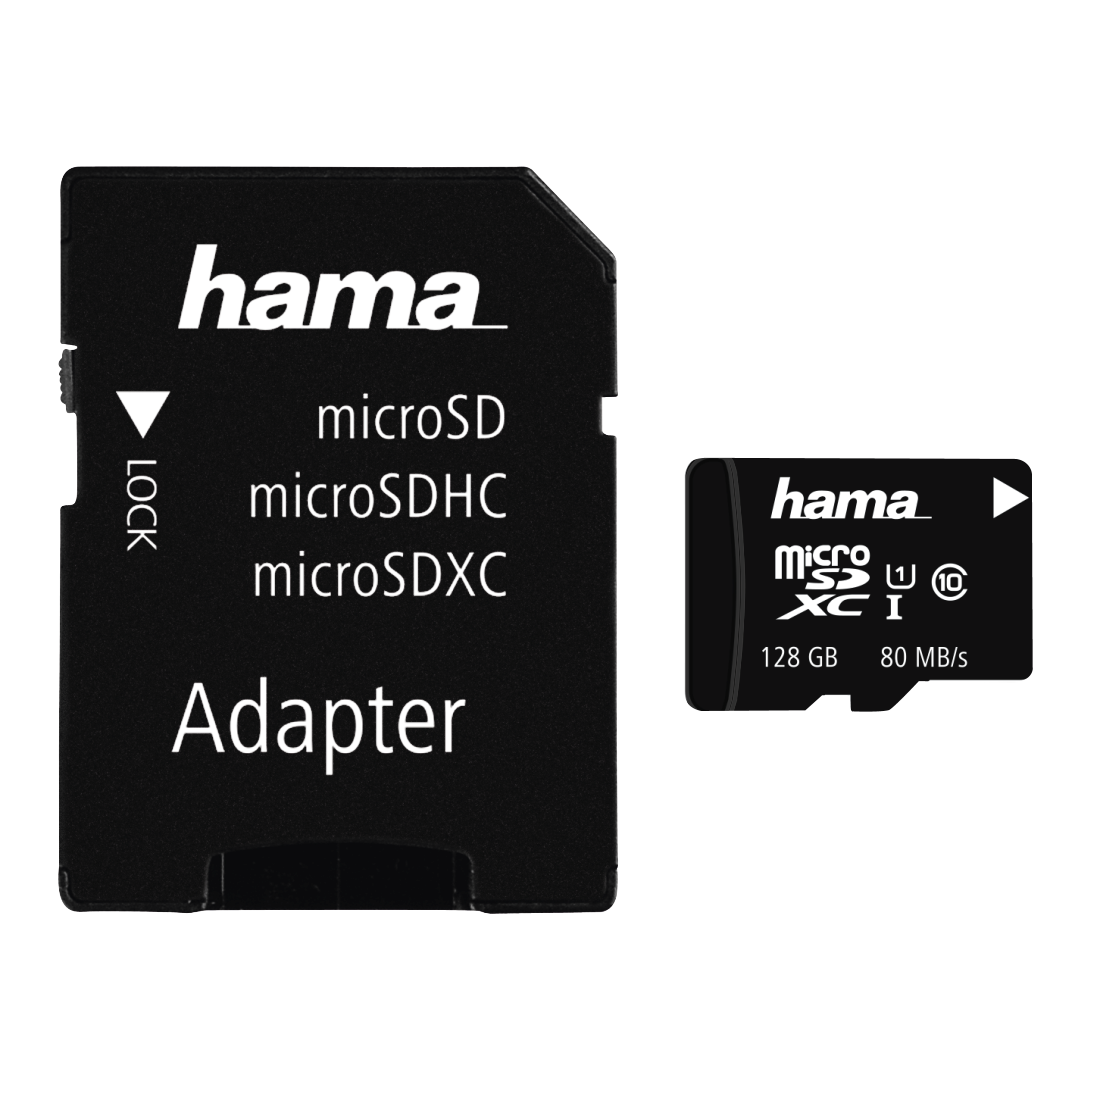 You Recently Viewed Hama 128GB Class 10 microSDXC, UHS-I 80MBs Image